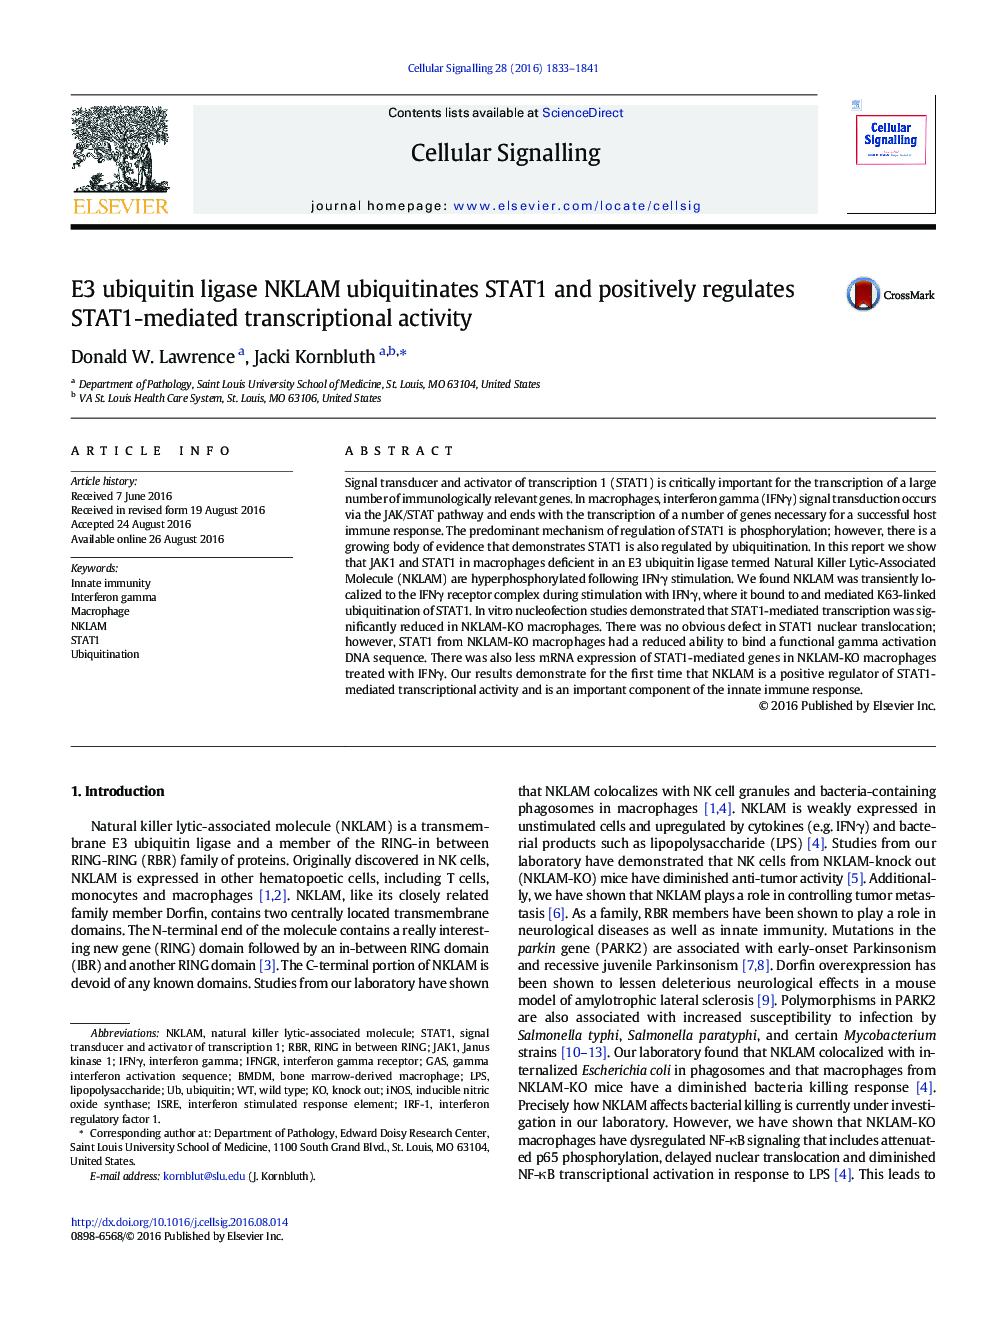 E3 ubiquitin ligase NKLAM ubiquitinates STAT1 and positively regulates STAT1-mediated transcriptional activity